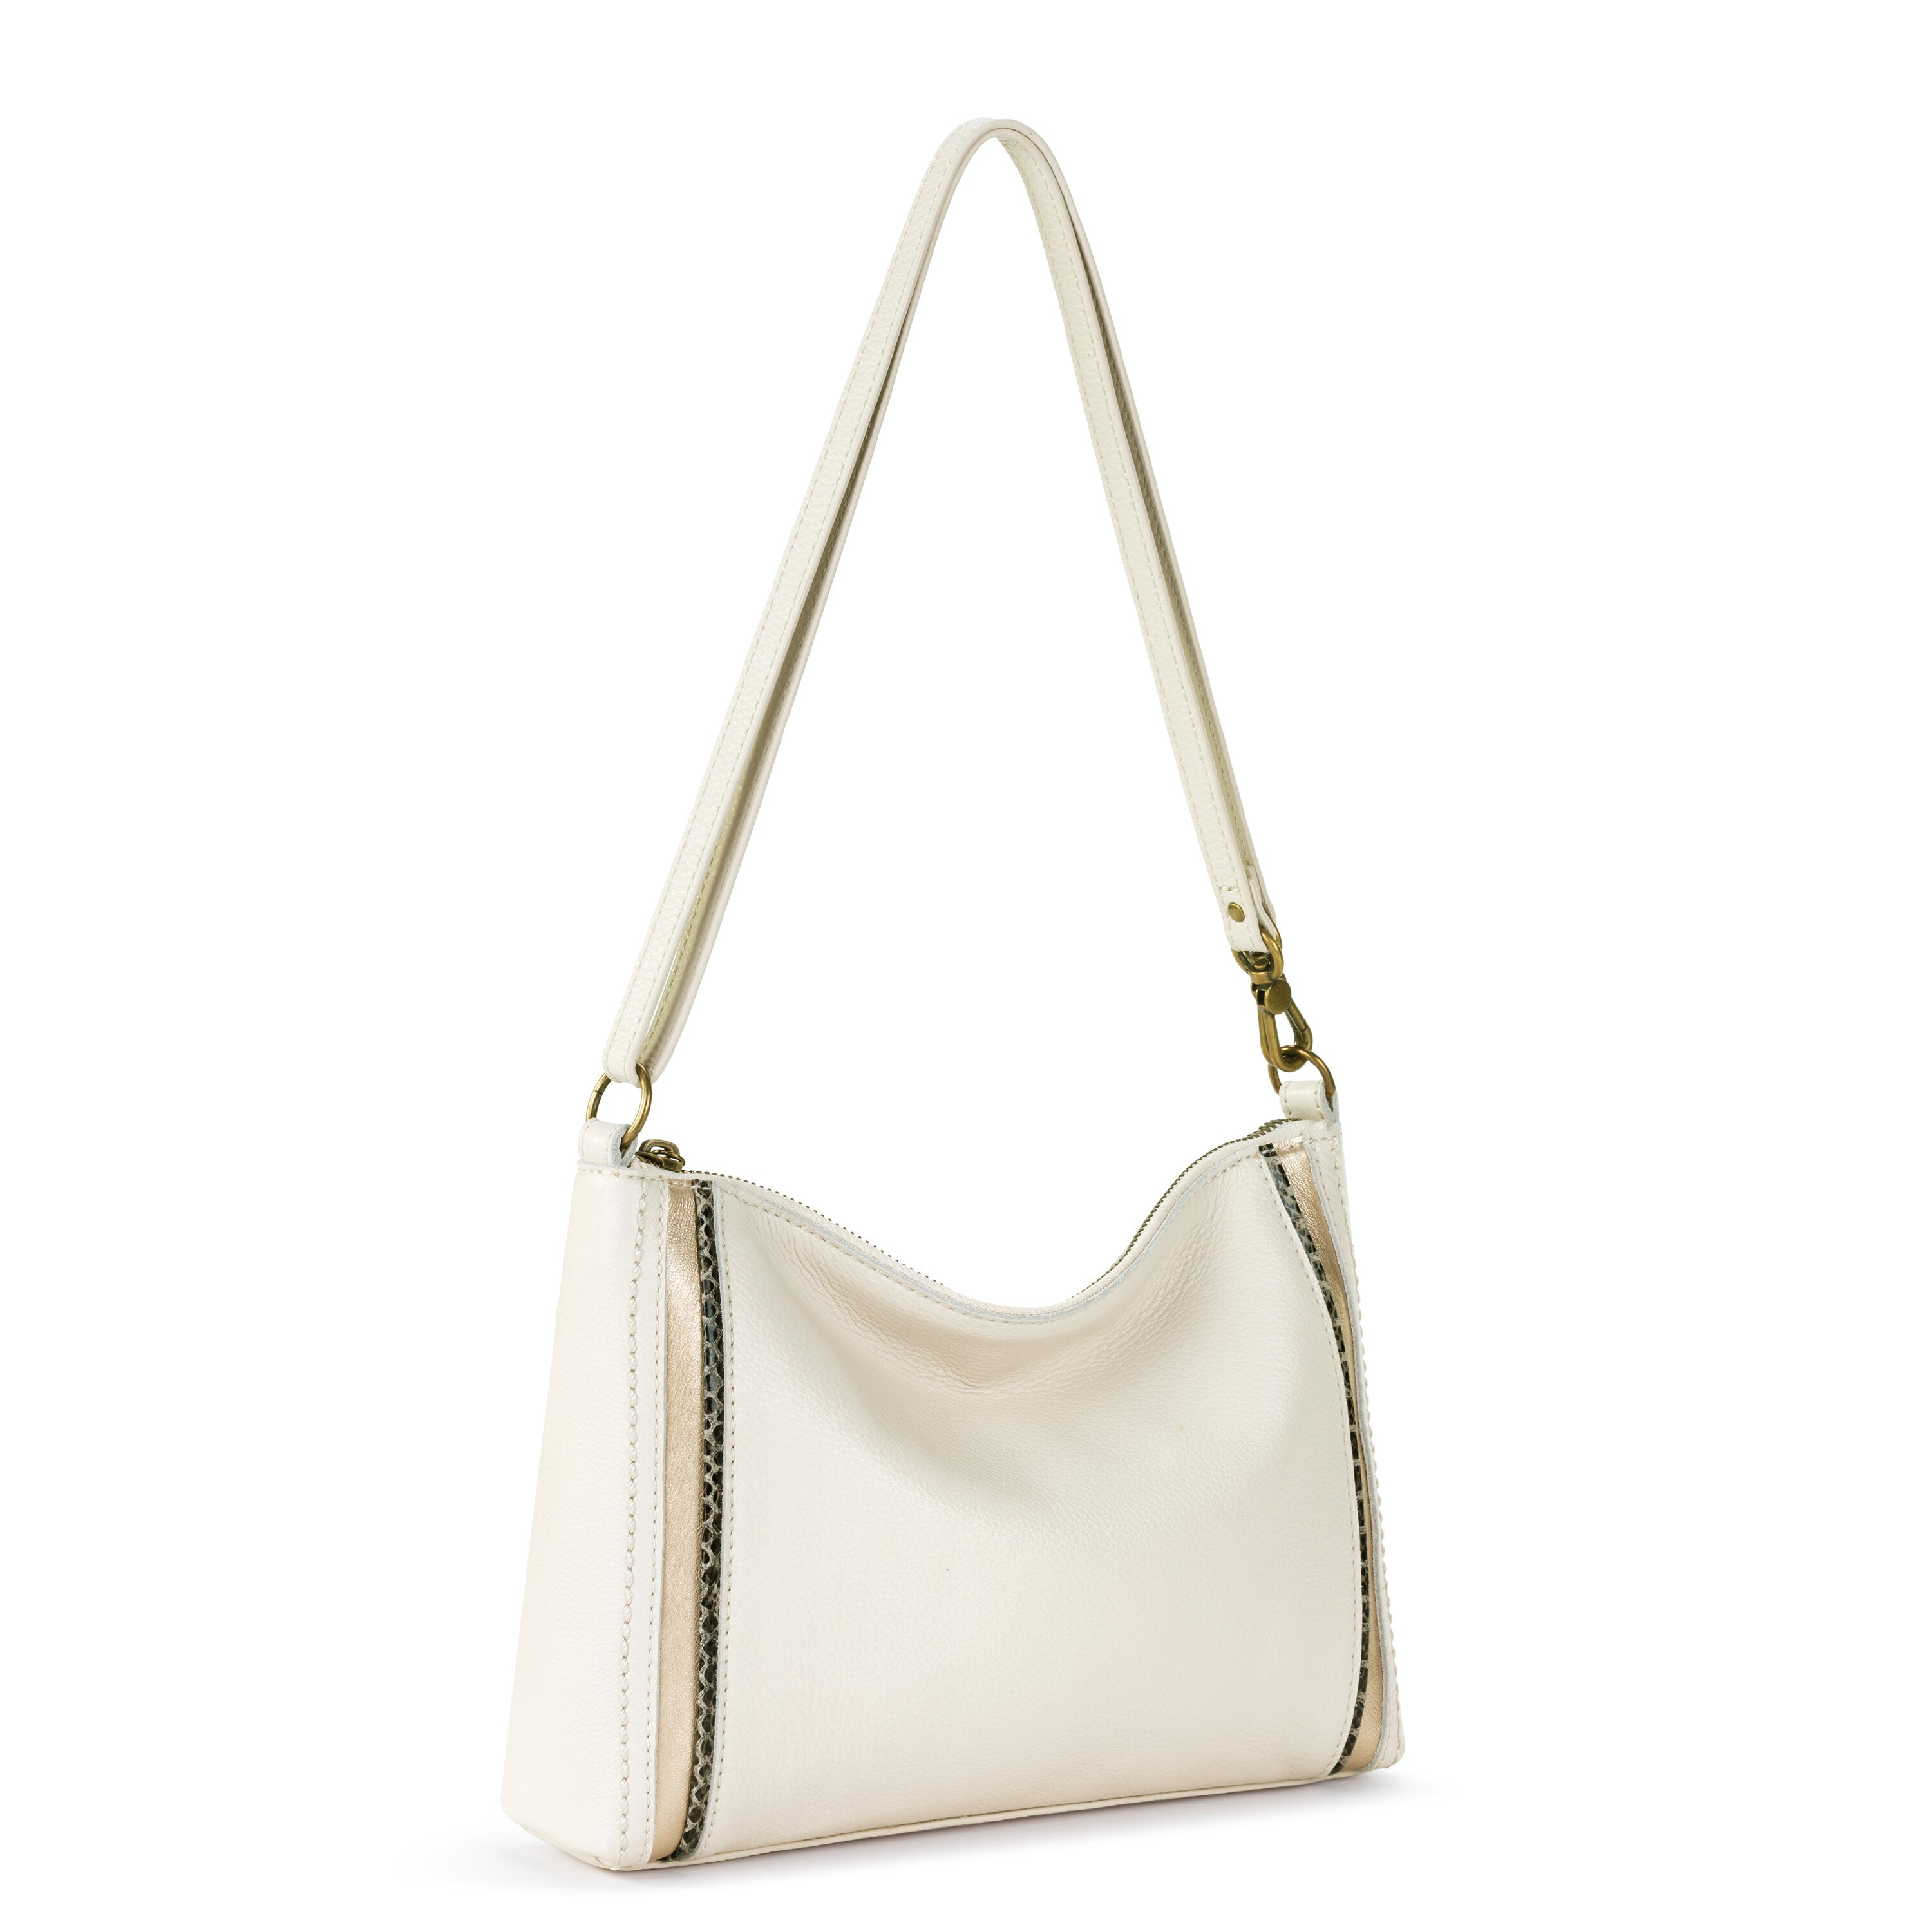 Anck Crossbody Bags Women Luxurious Leather Shoulder Purse- Zipper Pocket Women Small Crossbody Bag Handbags Shoulder Bag